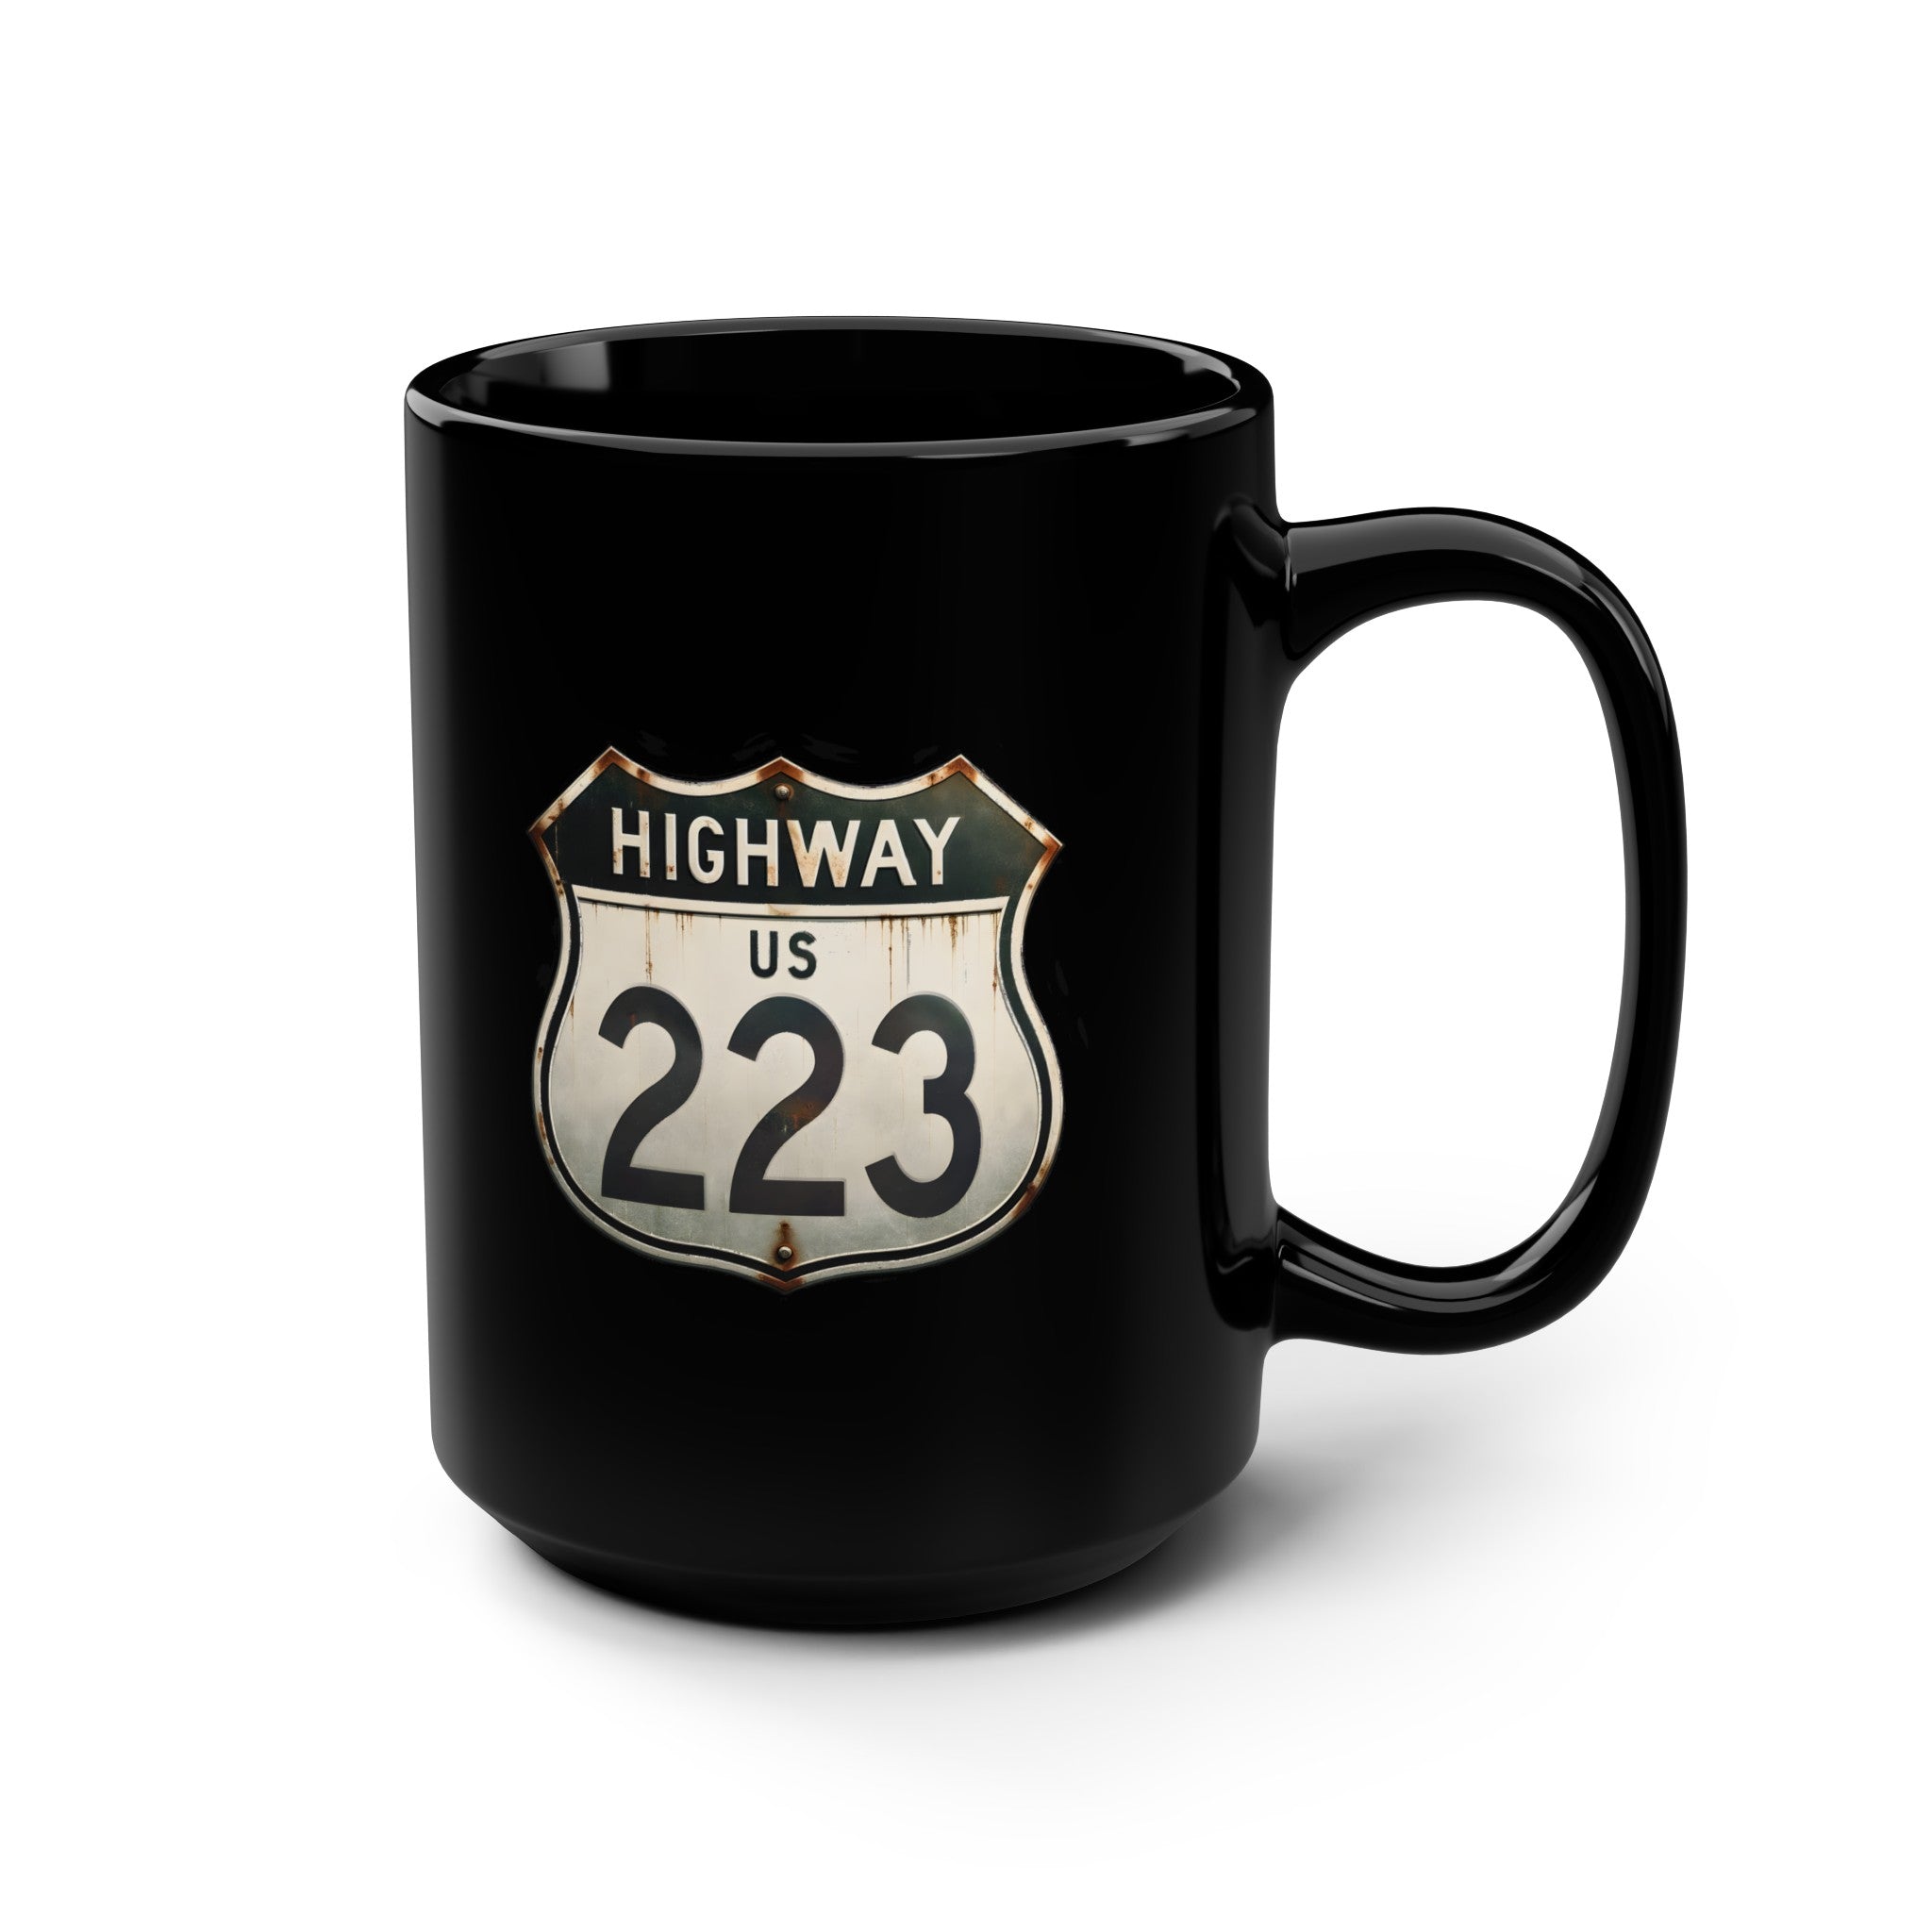 Highway 223 Black Mug, 15oz